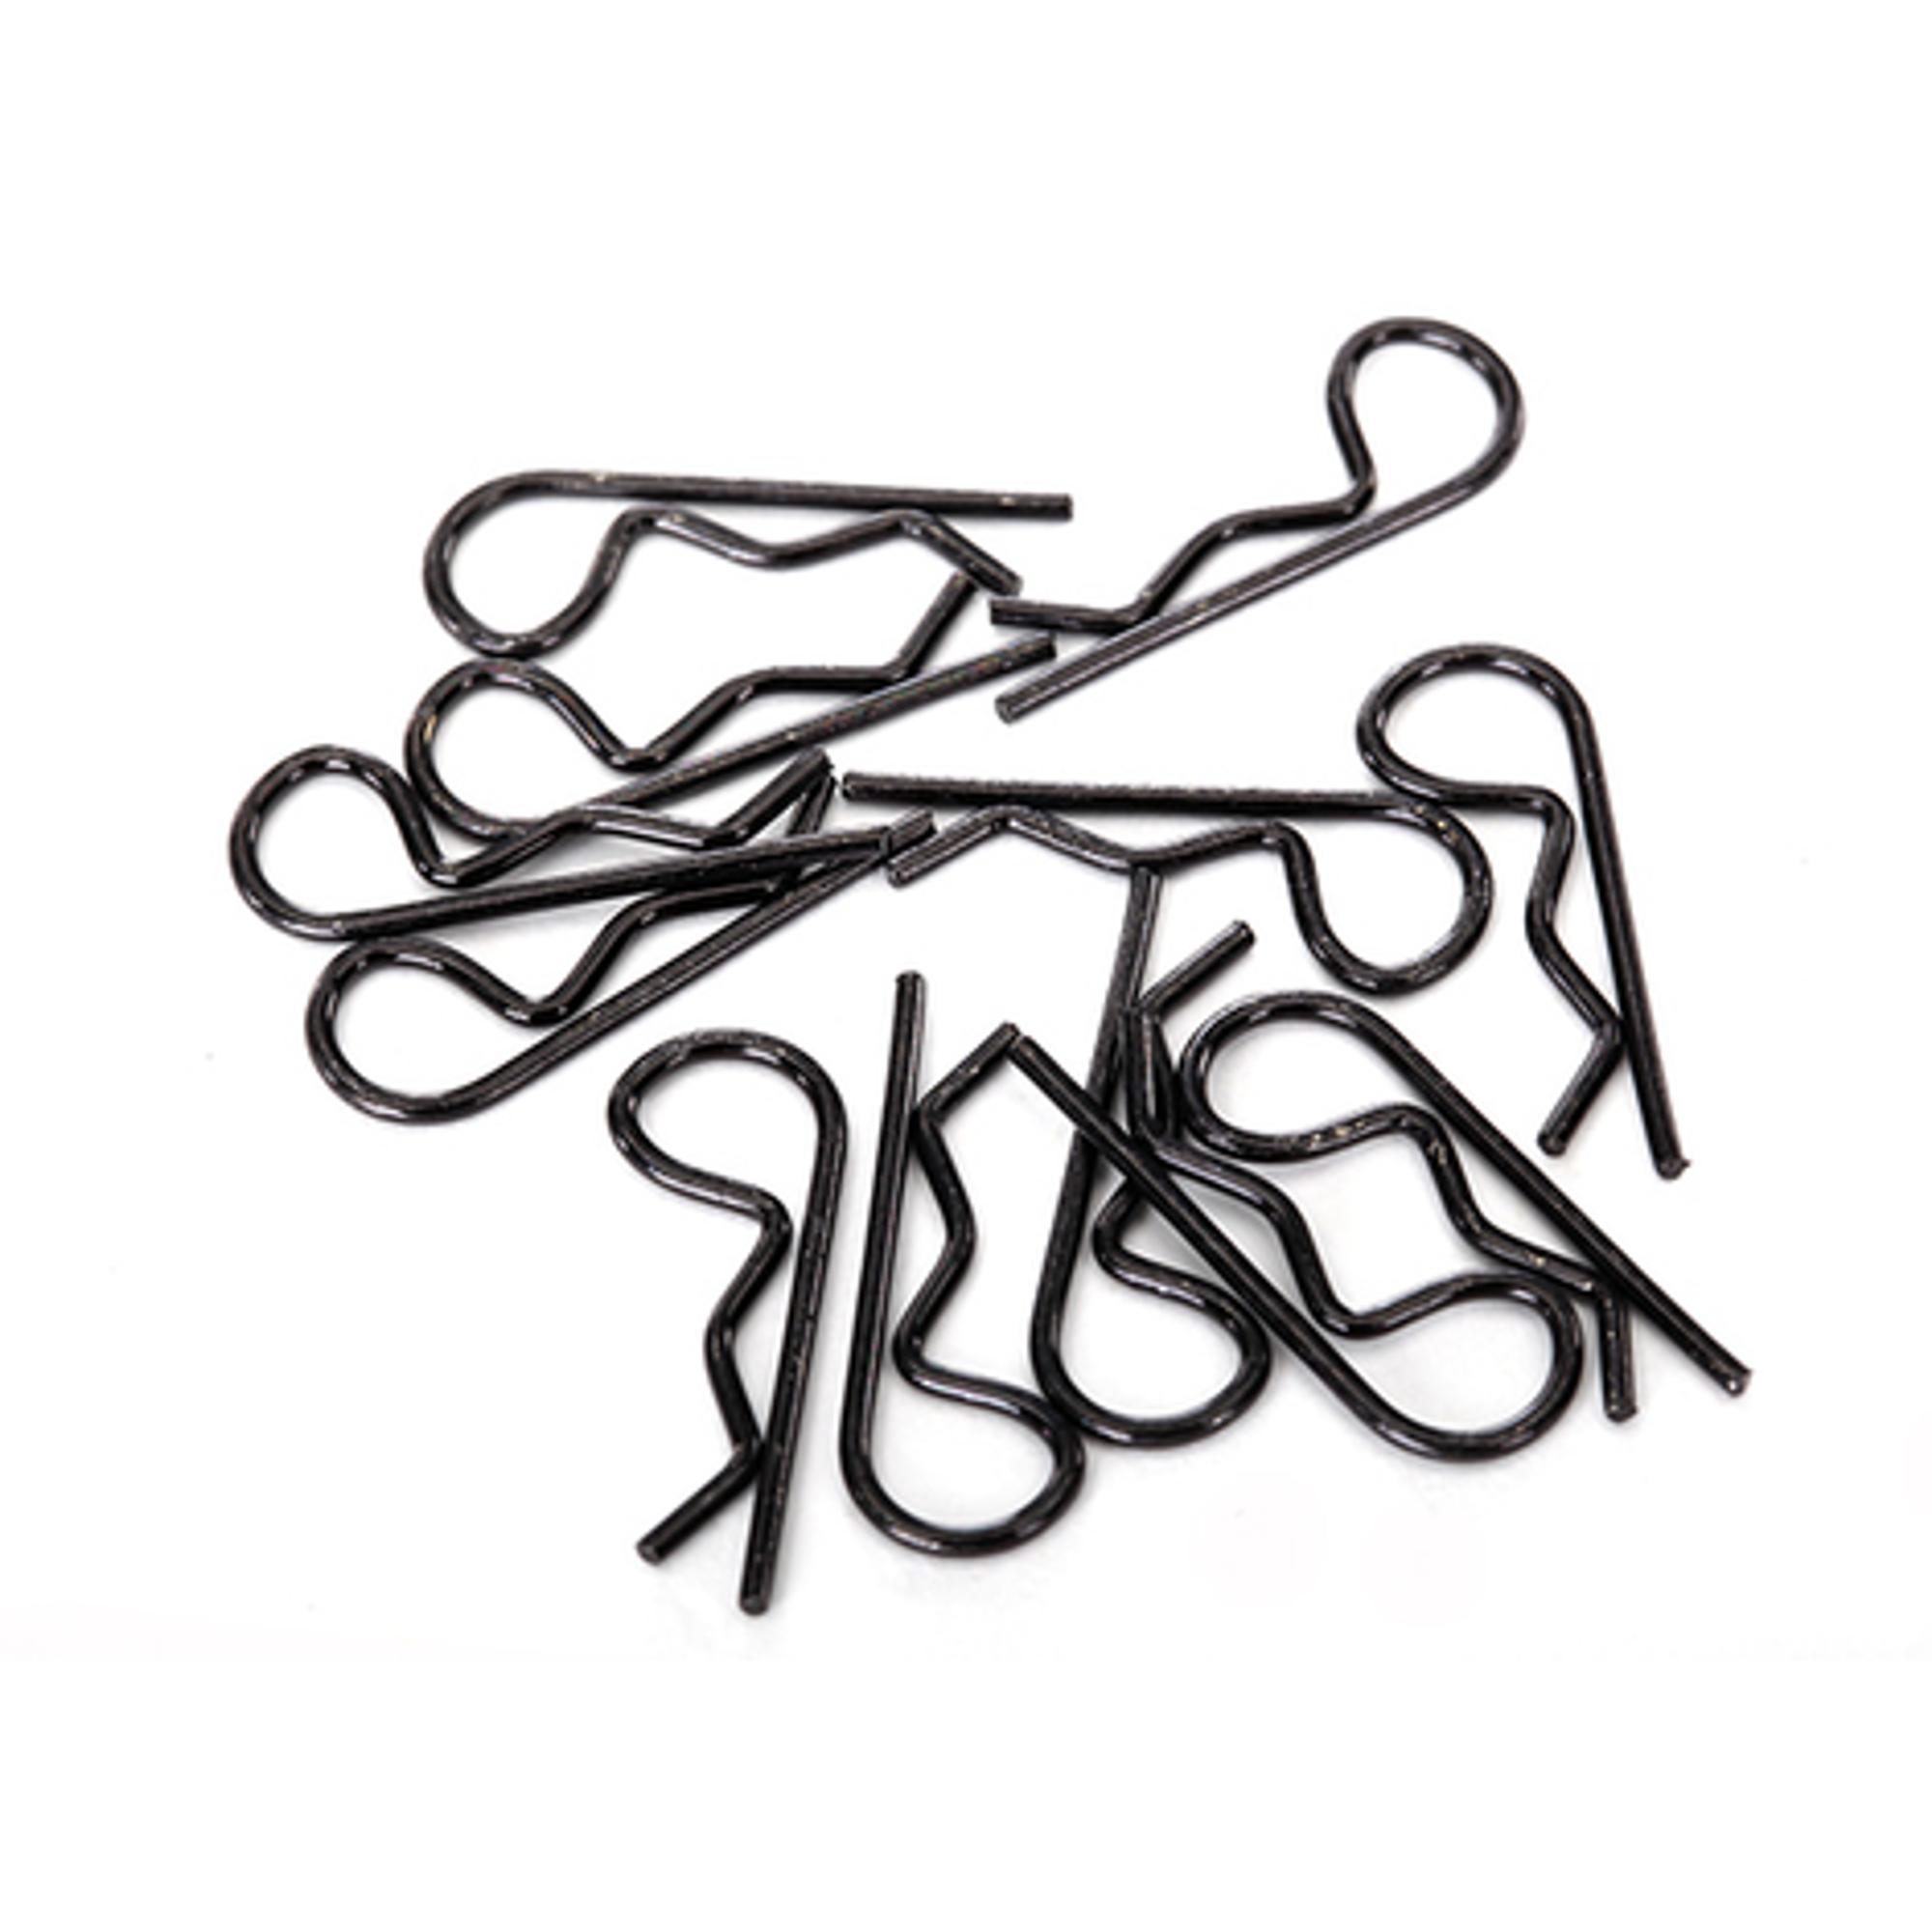 Traxxas Body clips, black (12) (standard size)